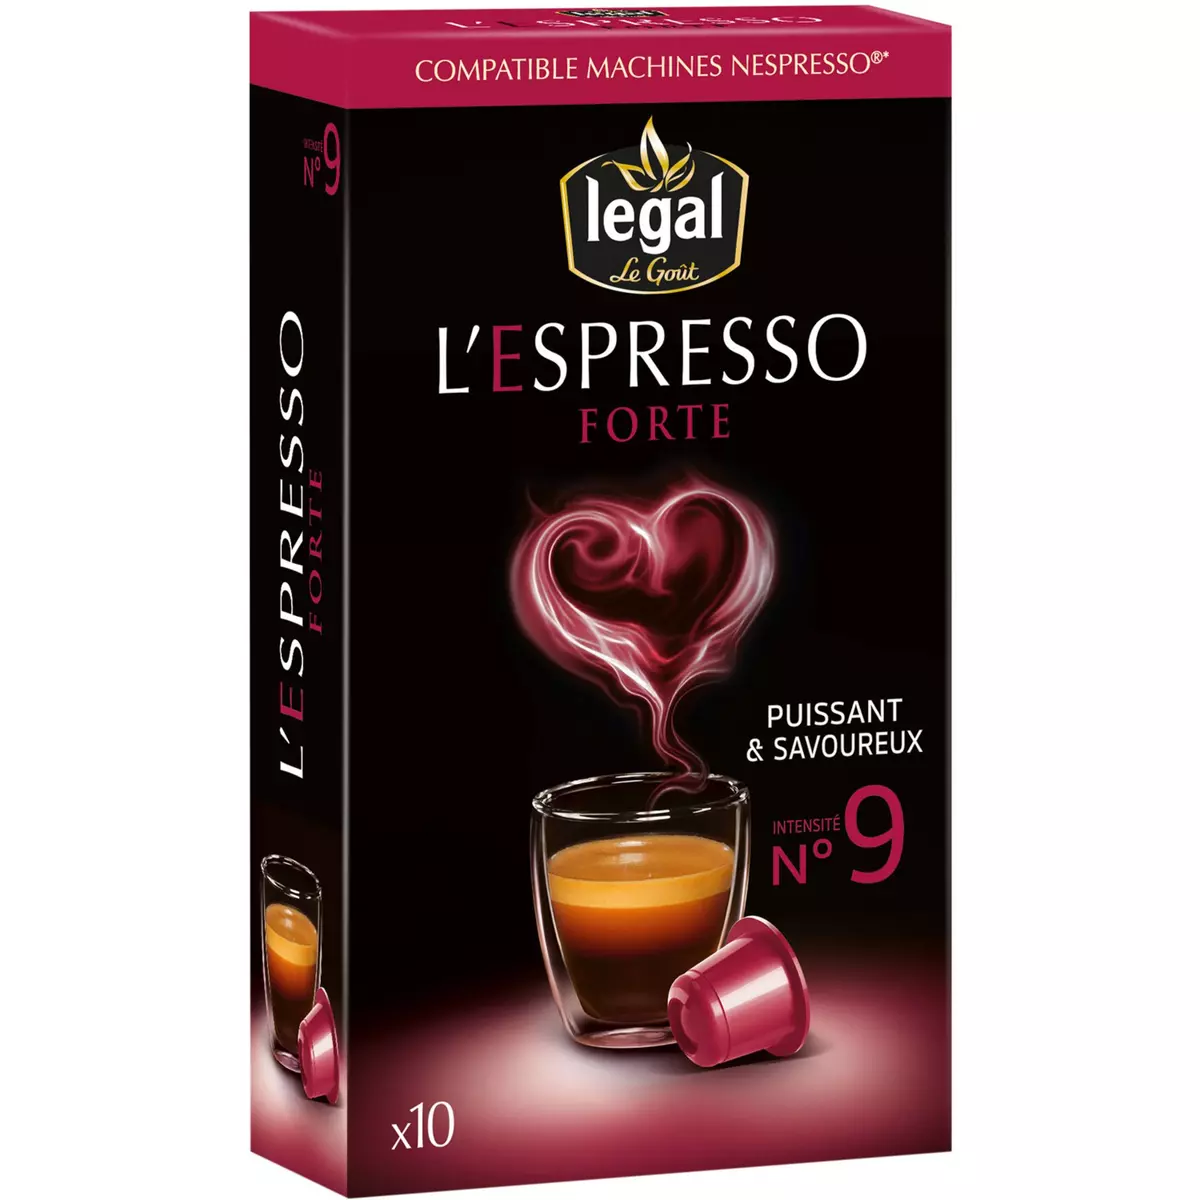 LEGAL Legal l'espresso forte nespresso capsule x10 -50g